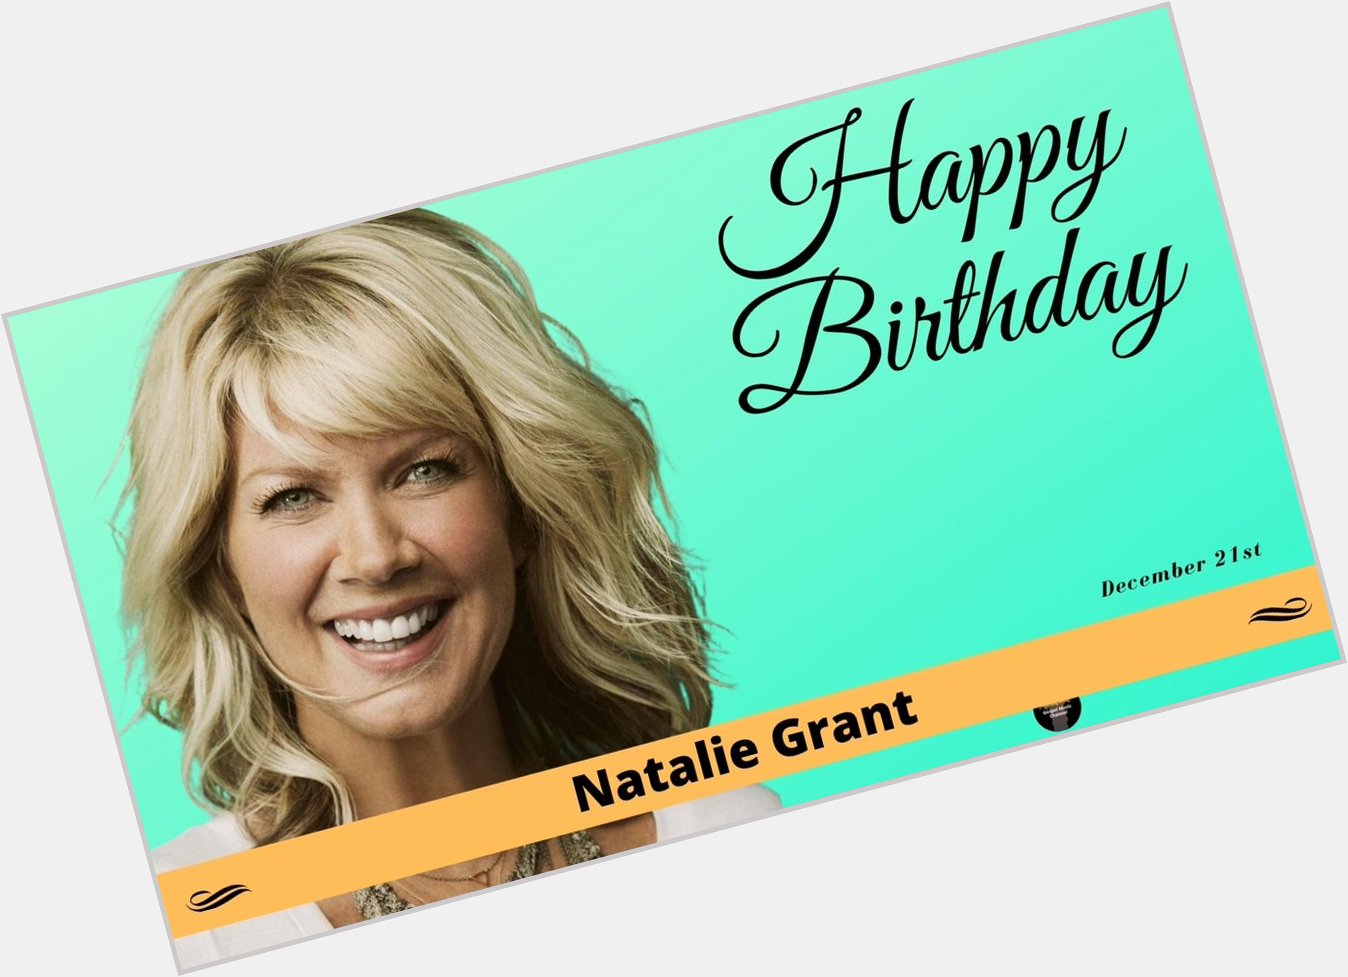 HAPPY BIRTHDAY, Natalie Grant!
- 